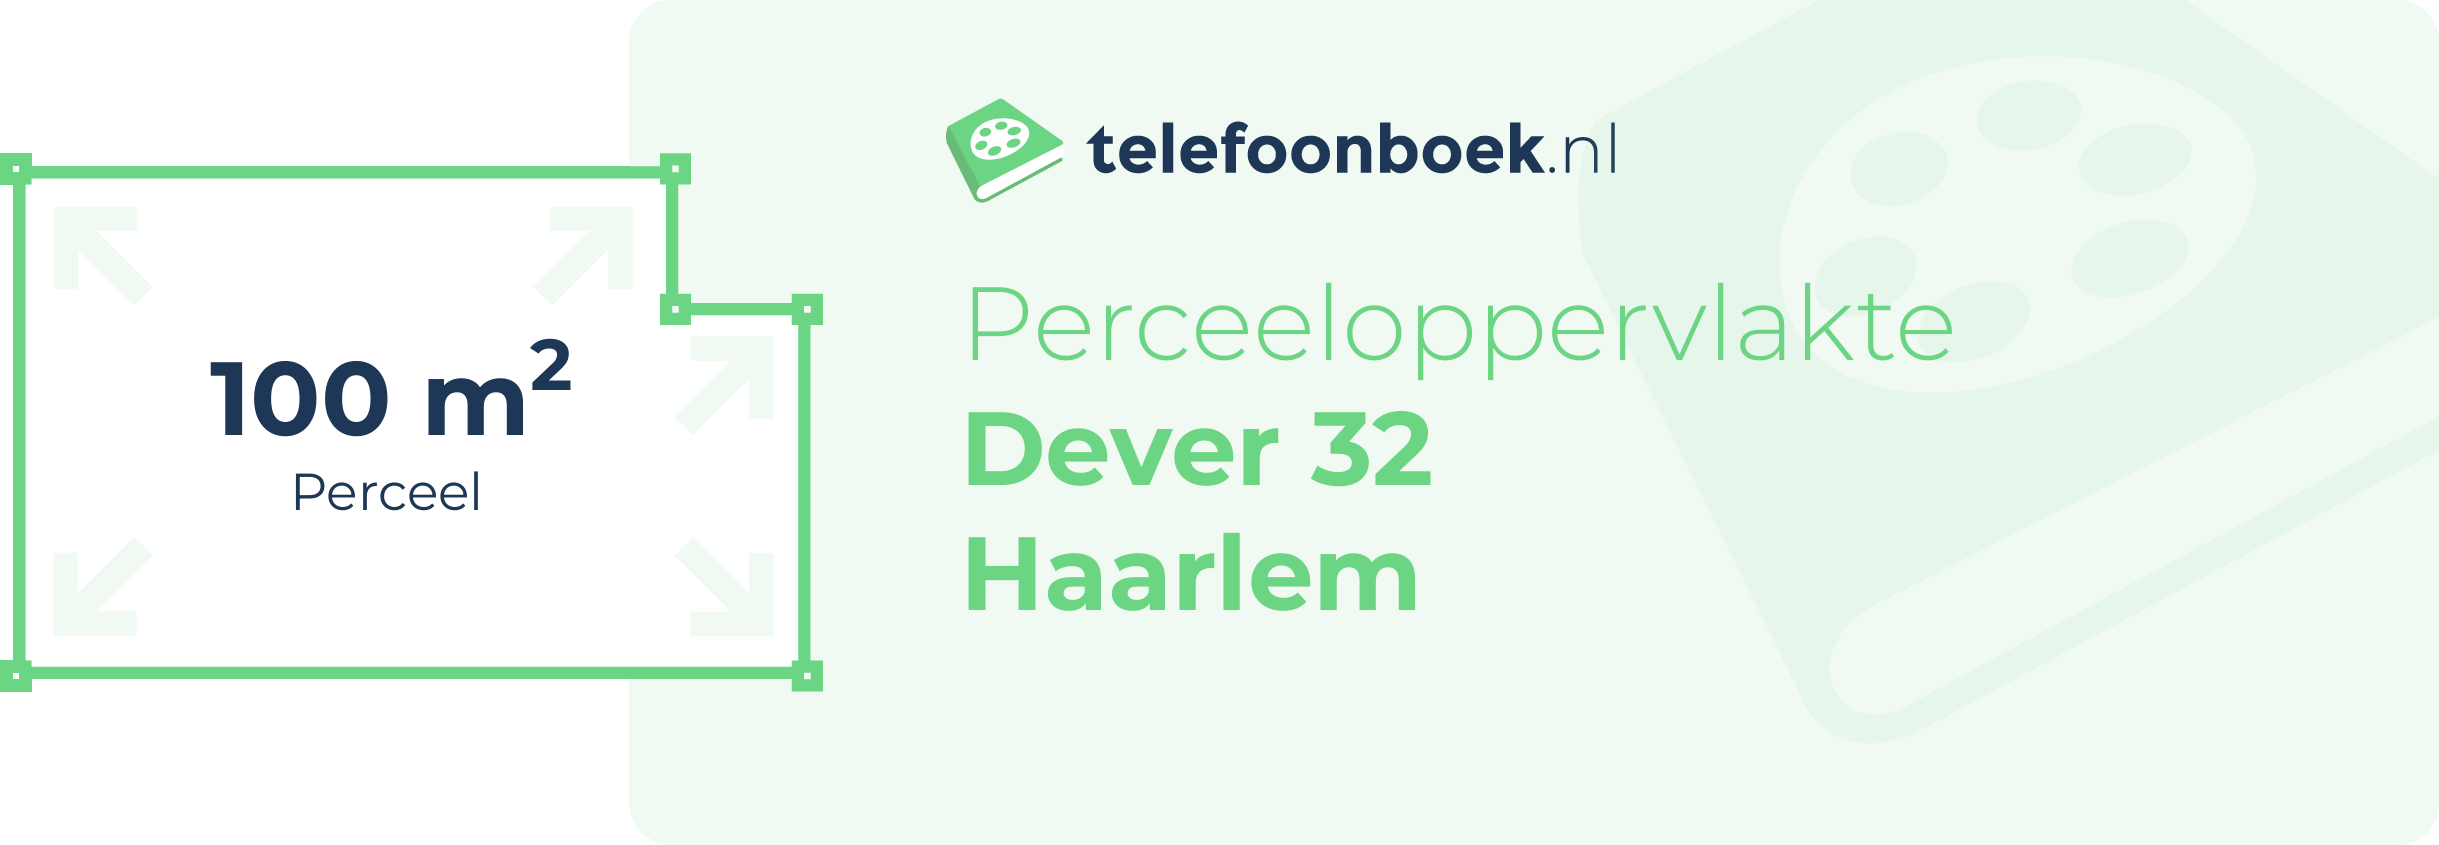 Perceeloppervlakte Dever 32 Haarlem